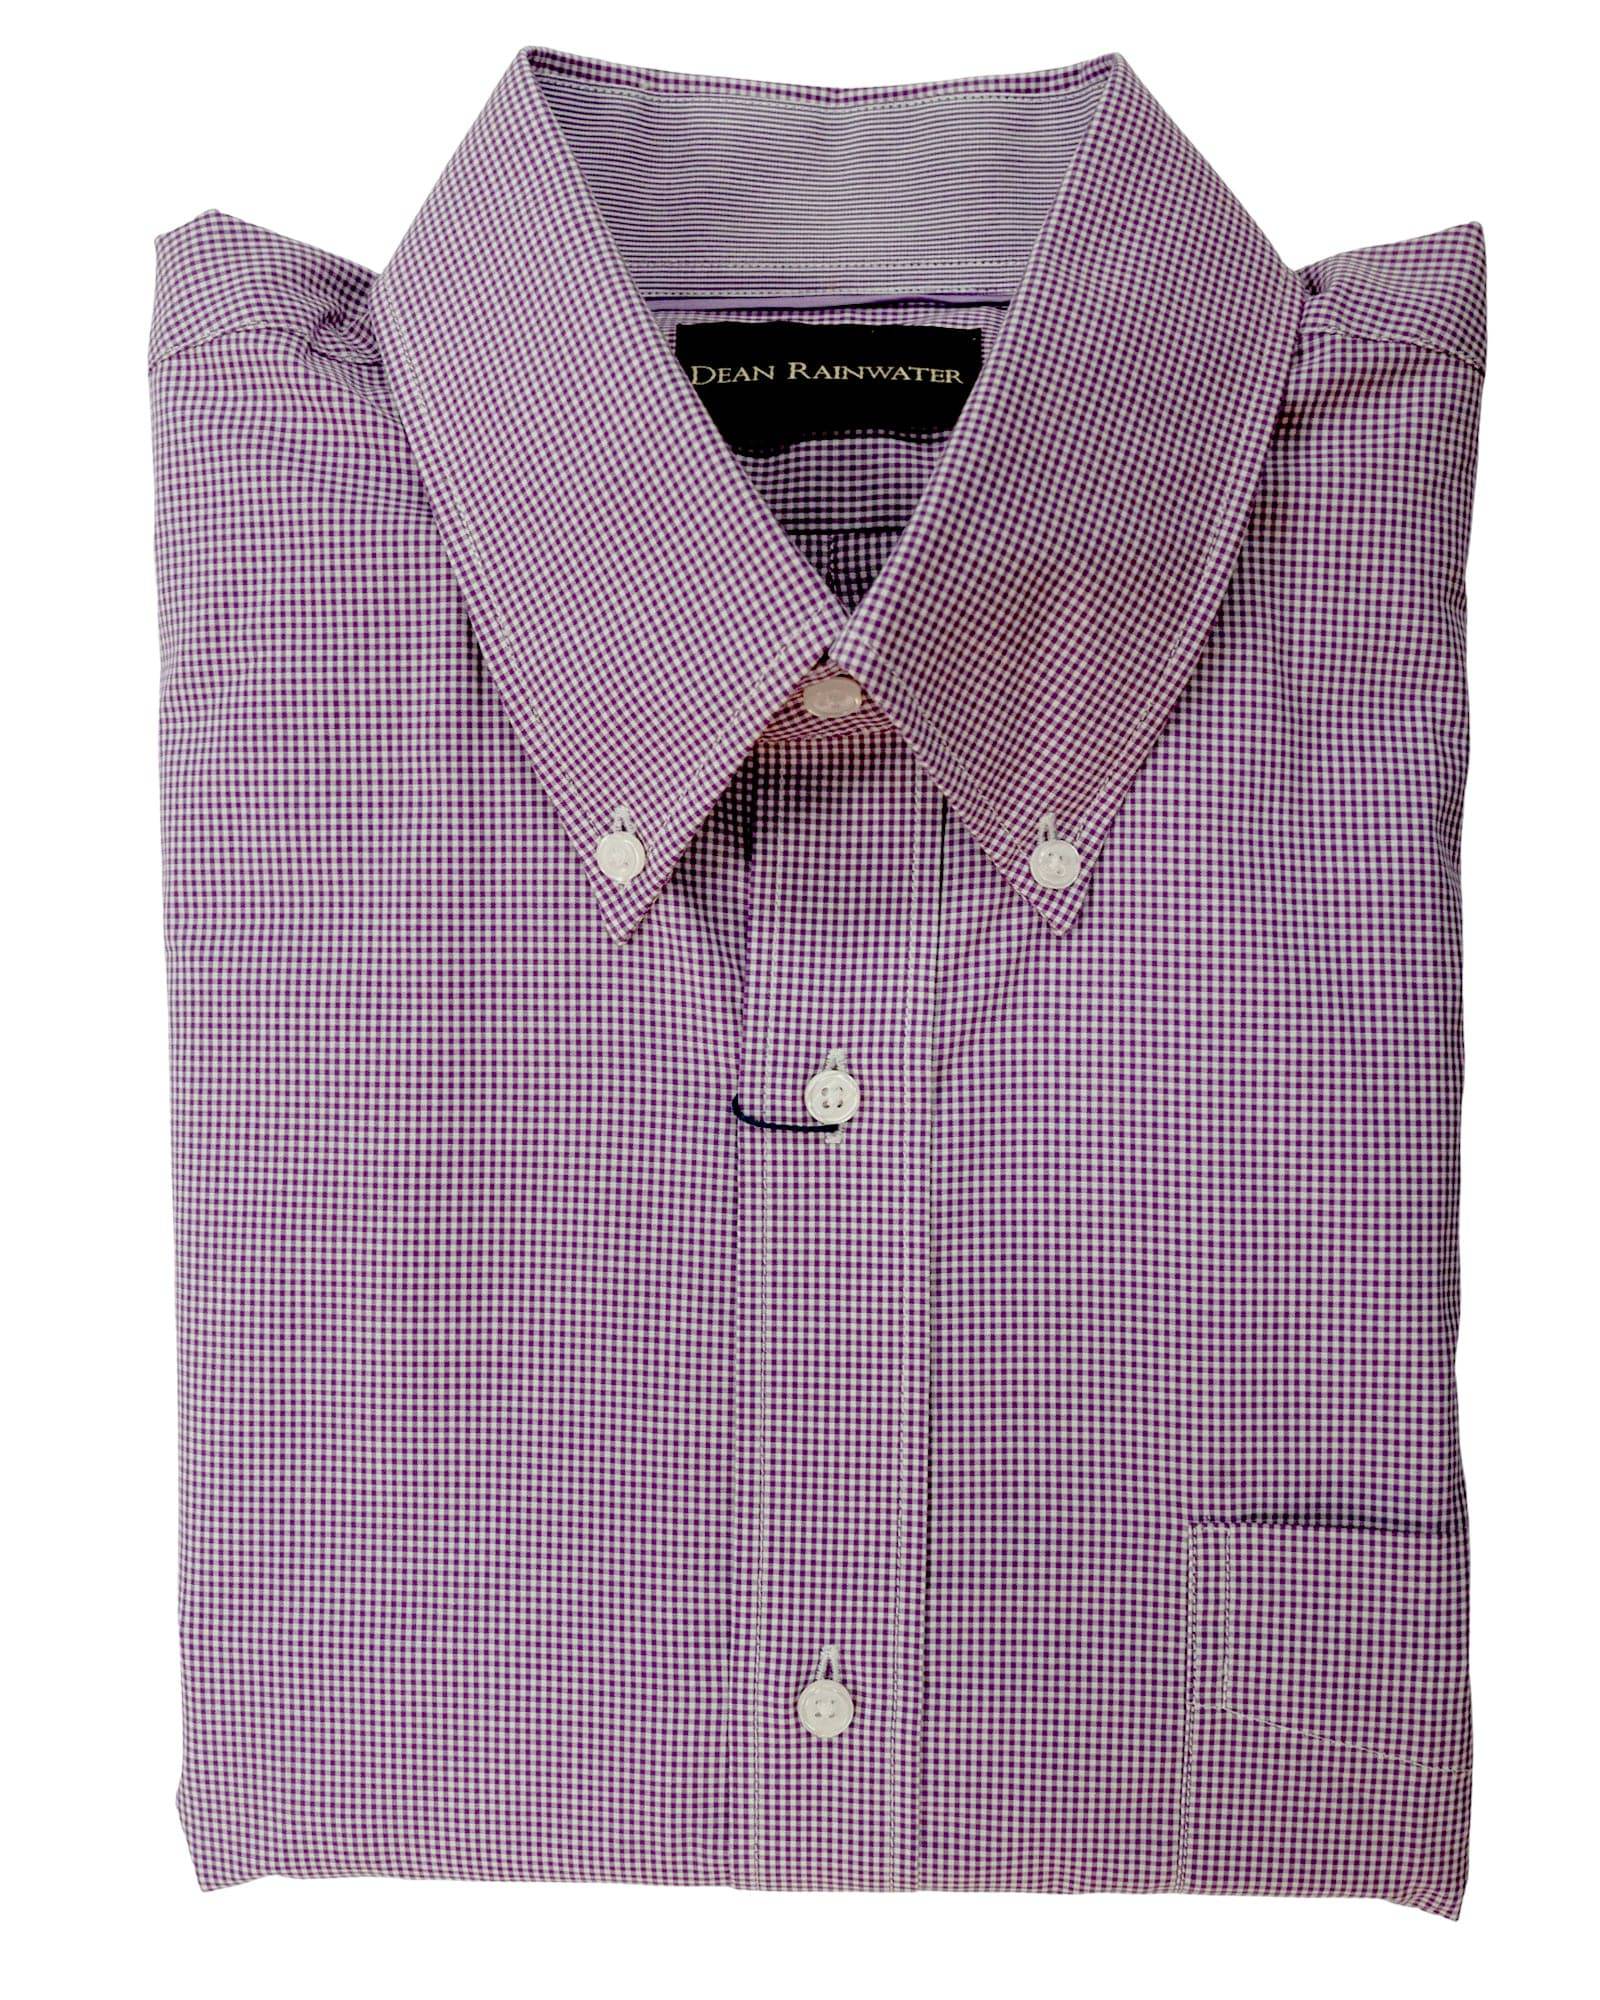 Dean Rainwater's 100% Cotton Mini Plum Gingham Button Down Sport Shirt - Rainwater's Men's Clothing and Tuxedo Rental